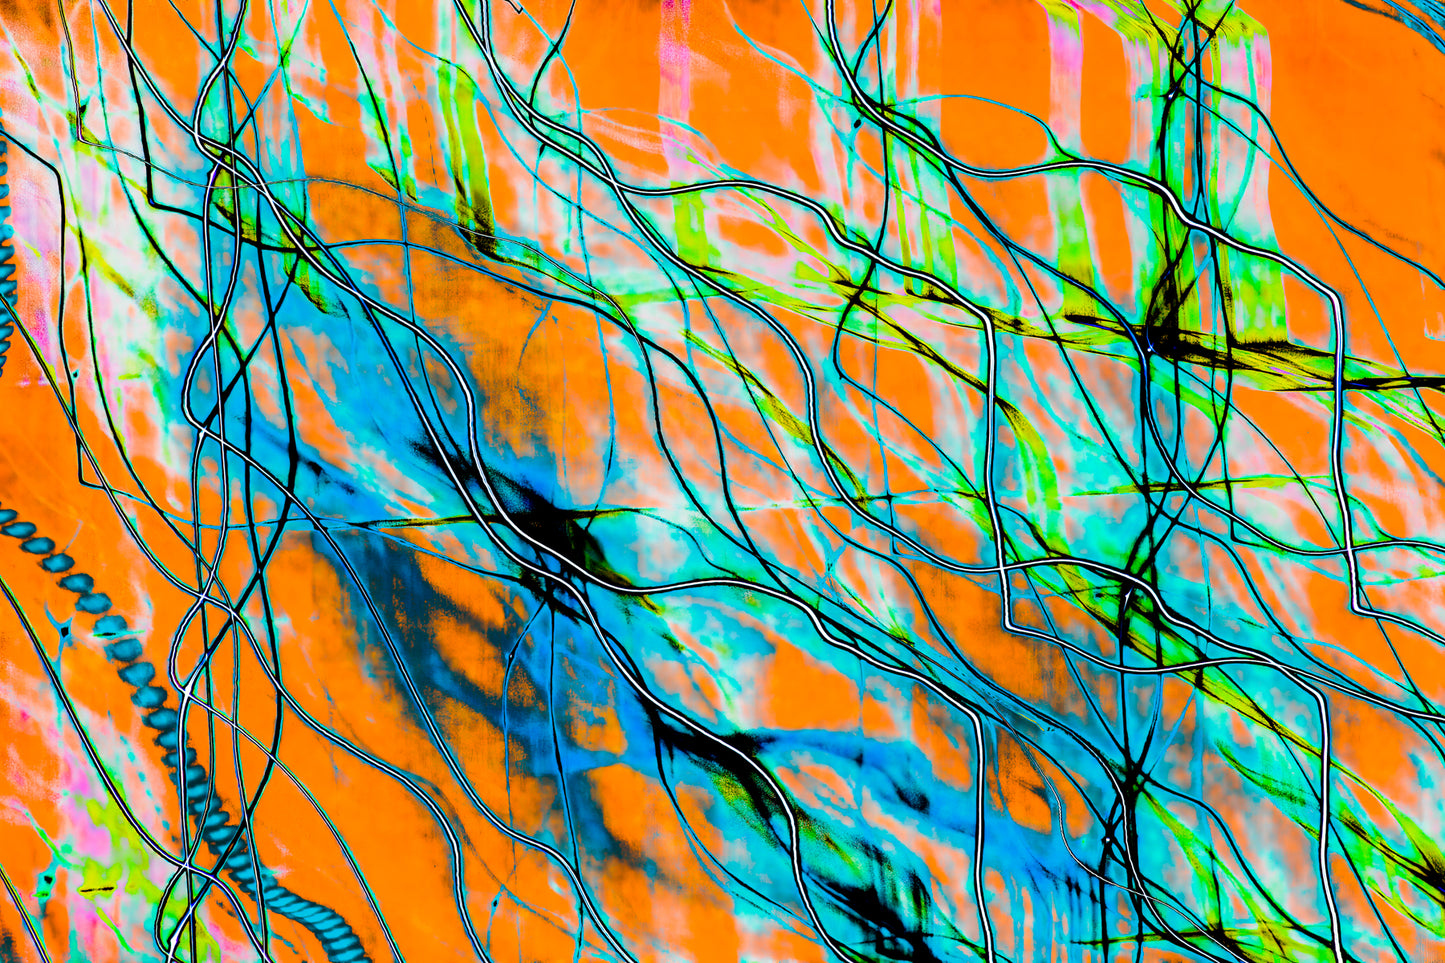 "Alternating Currents through Tangerine Flame" photo art print